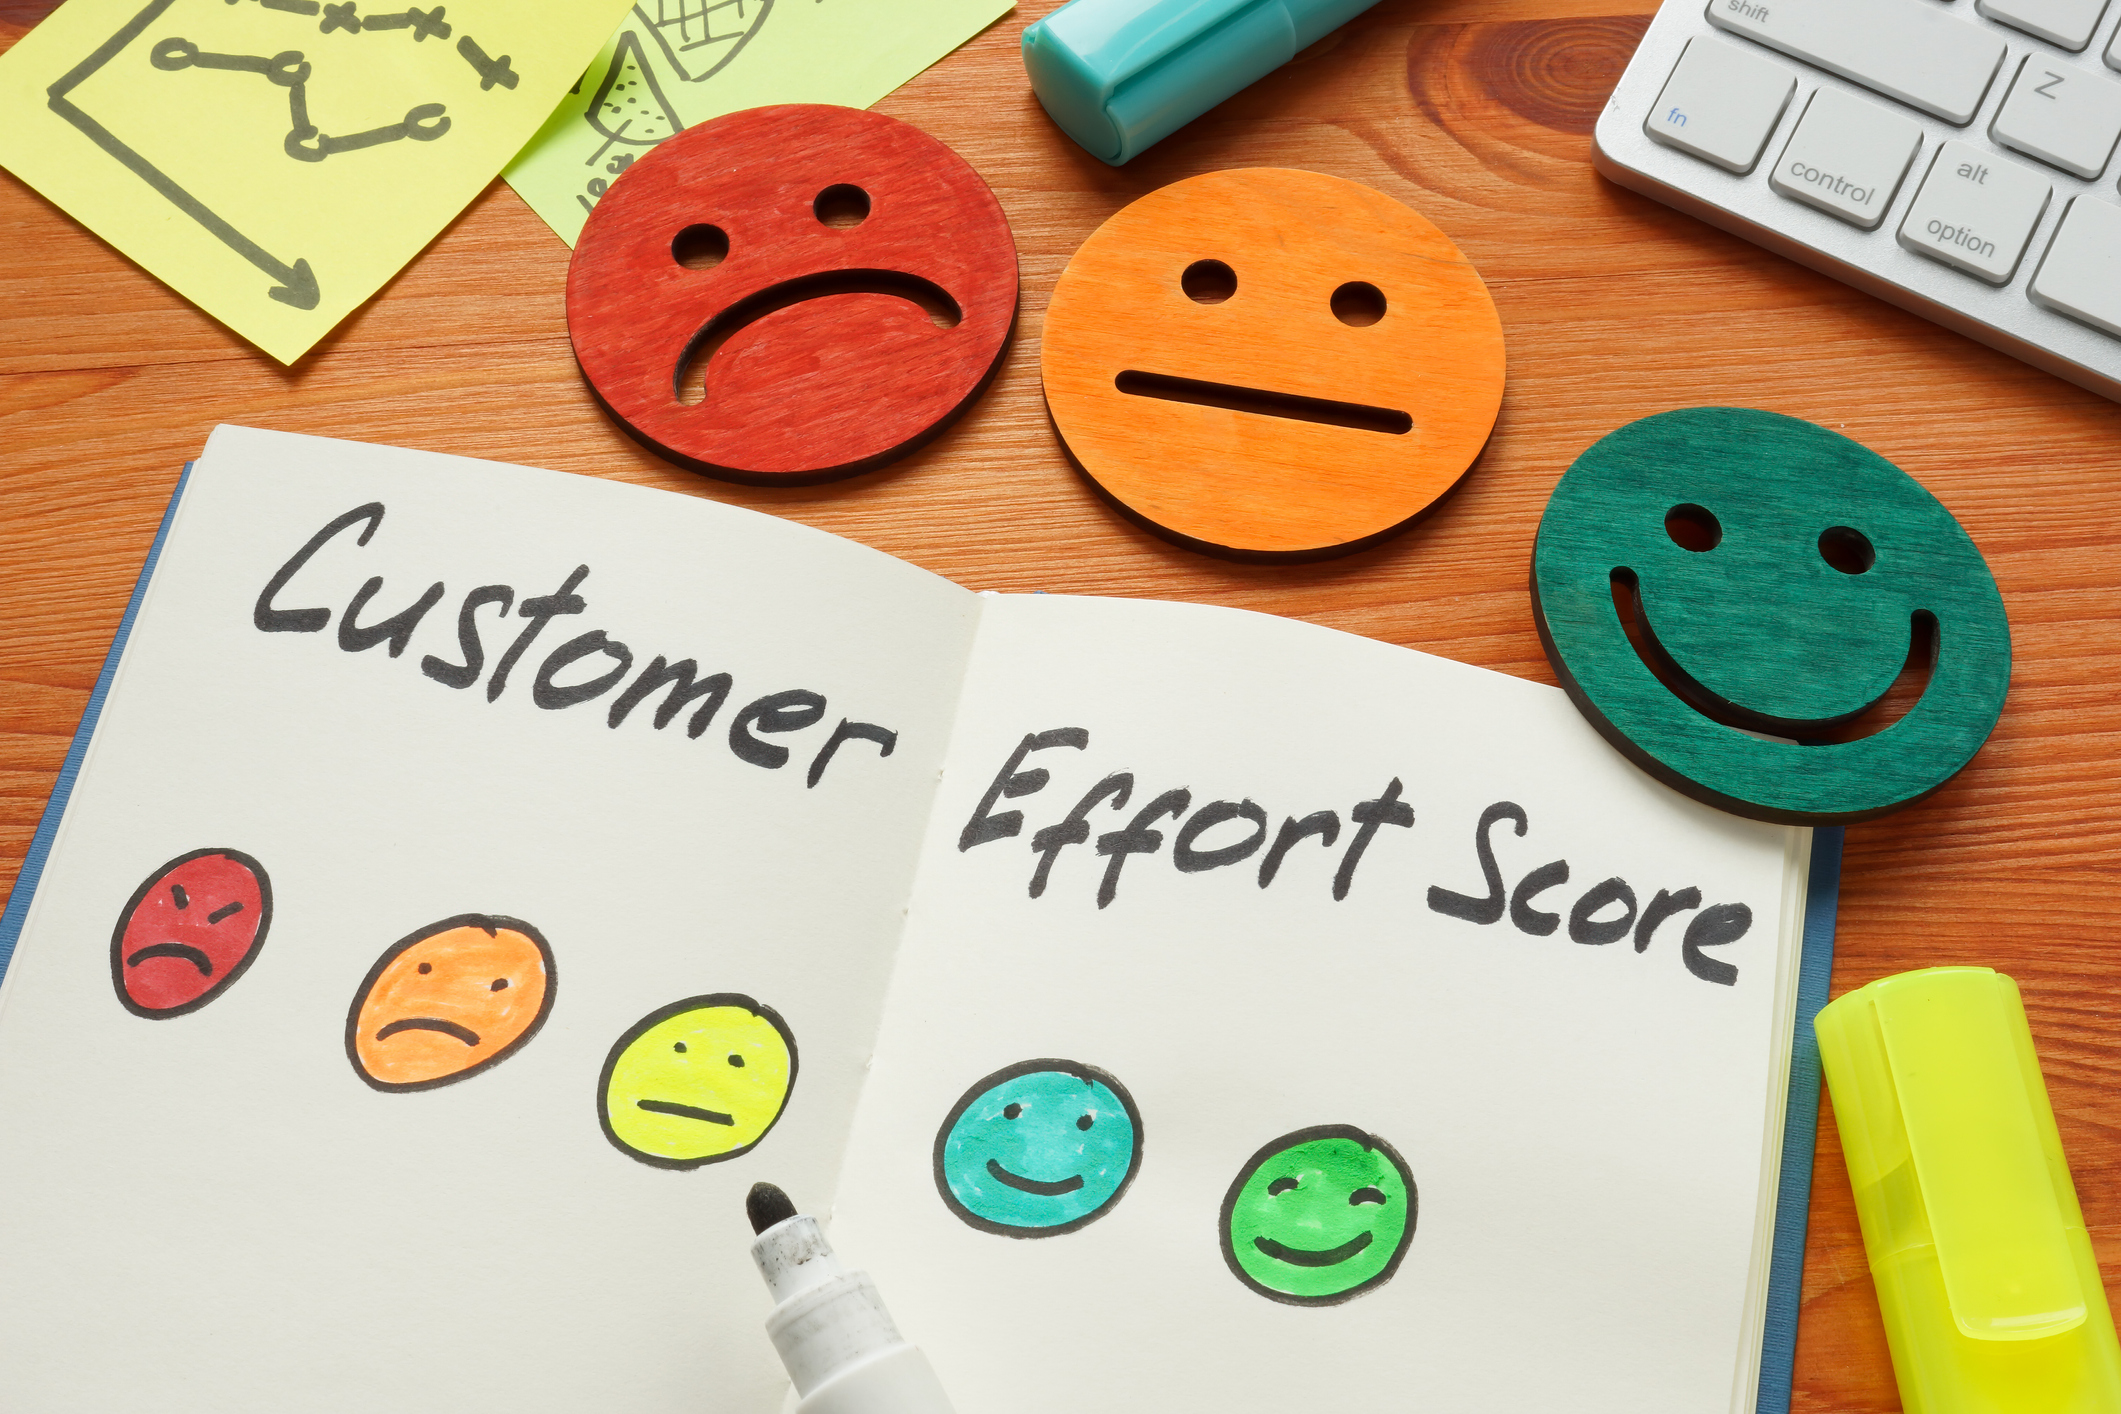 customer effort score